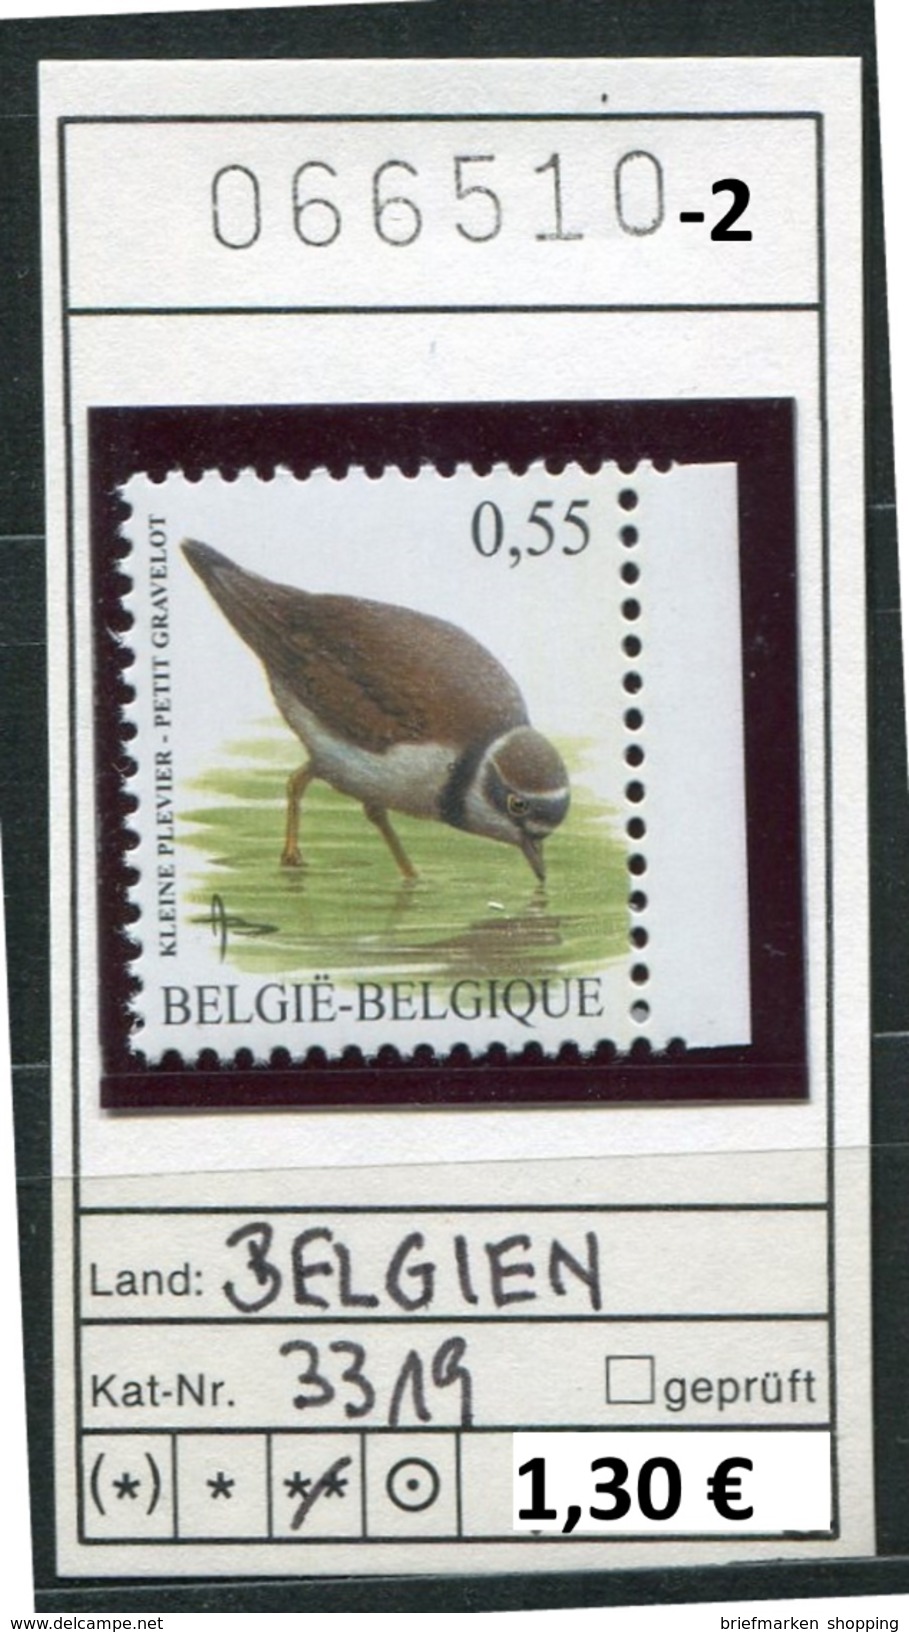 Buzin - Belgien - Belgique - Belgium - Belgie - Michel 3319 - Vögel Buzin Oiseaux Birds -  - ** Mnh Neuf Postfris - 1985-.. Pájaros (Buzin)